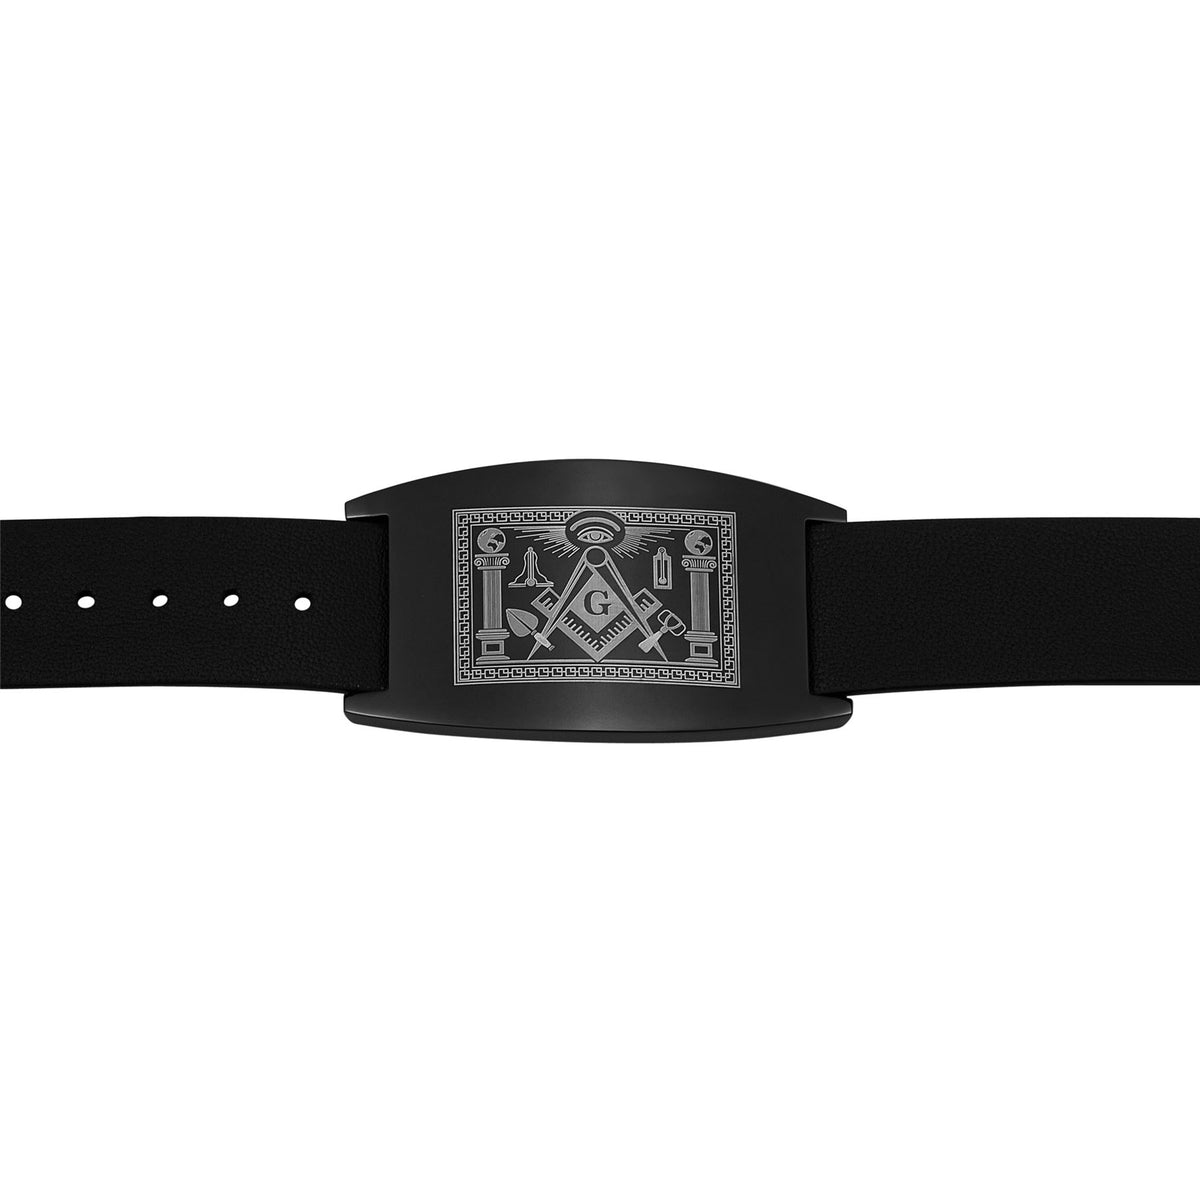 MasonicMan Leather Freemasonry Masonic Bracelet with Working Tools Design in Gift Box …